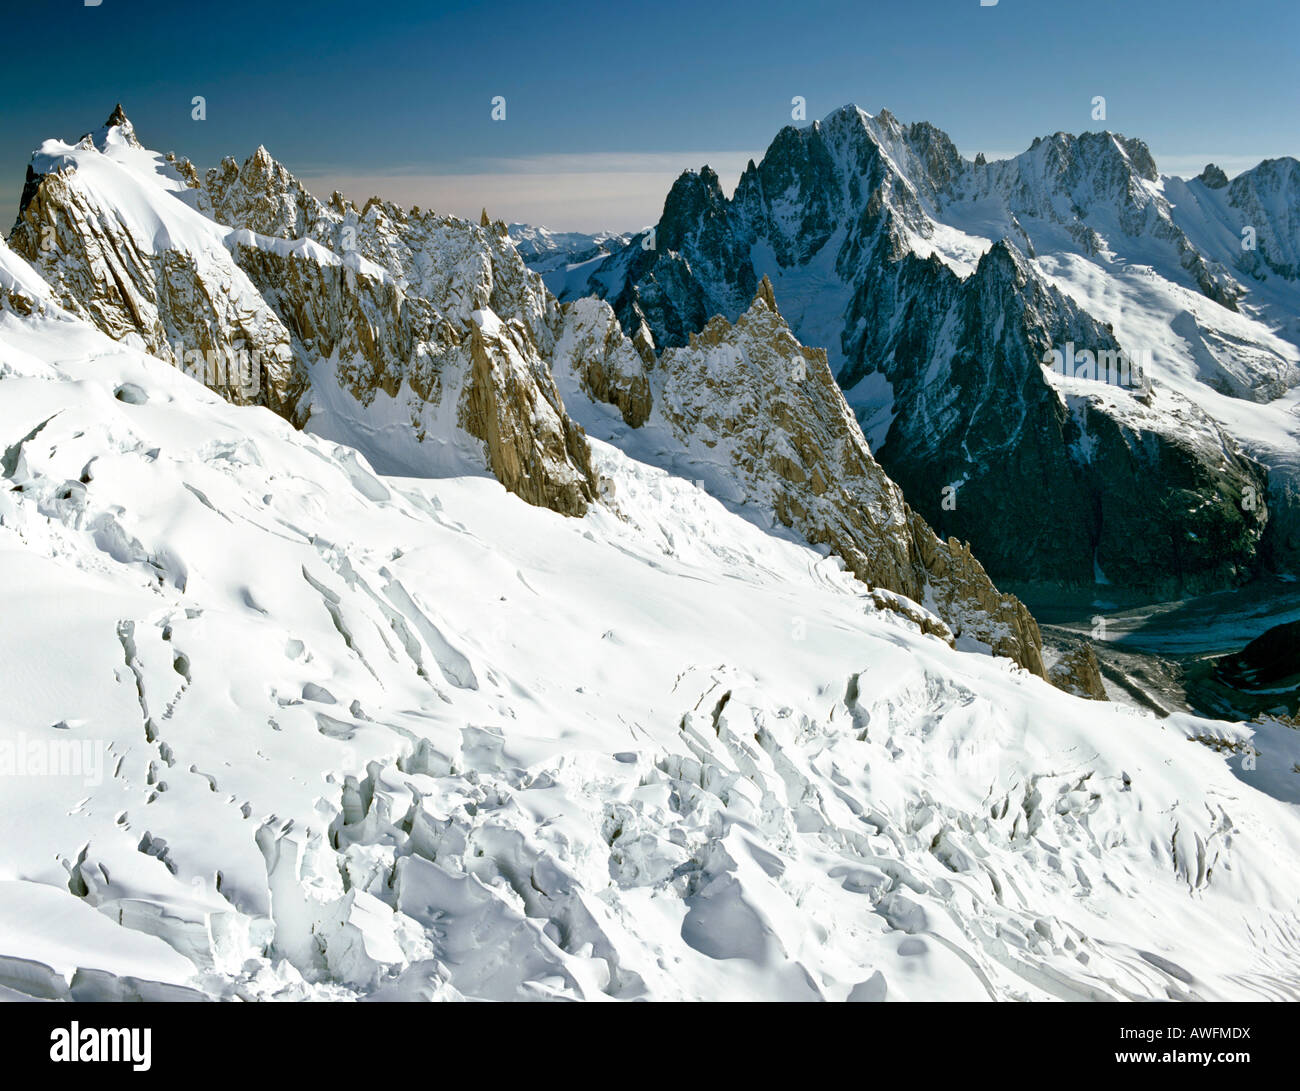 Mer de Glace Glacier, crevasses and breaks, Mont Blanc massif, Savoy Alps, France, Europe Stock Photo